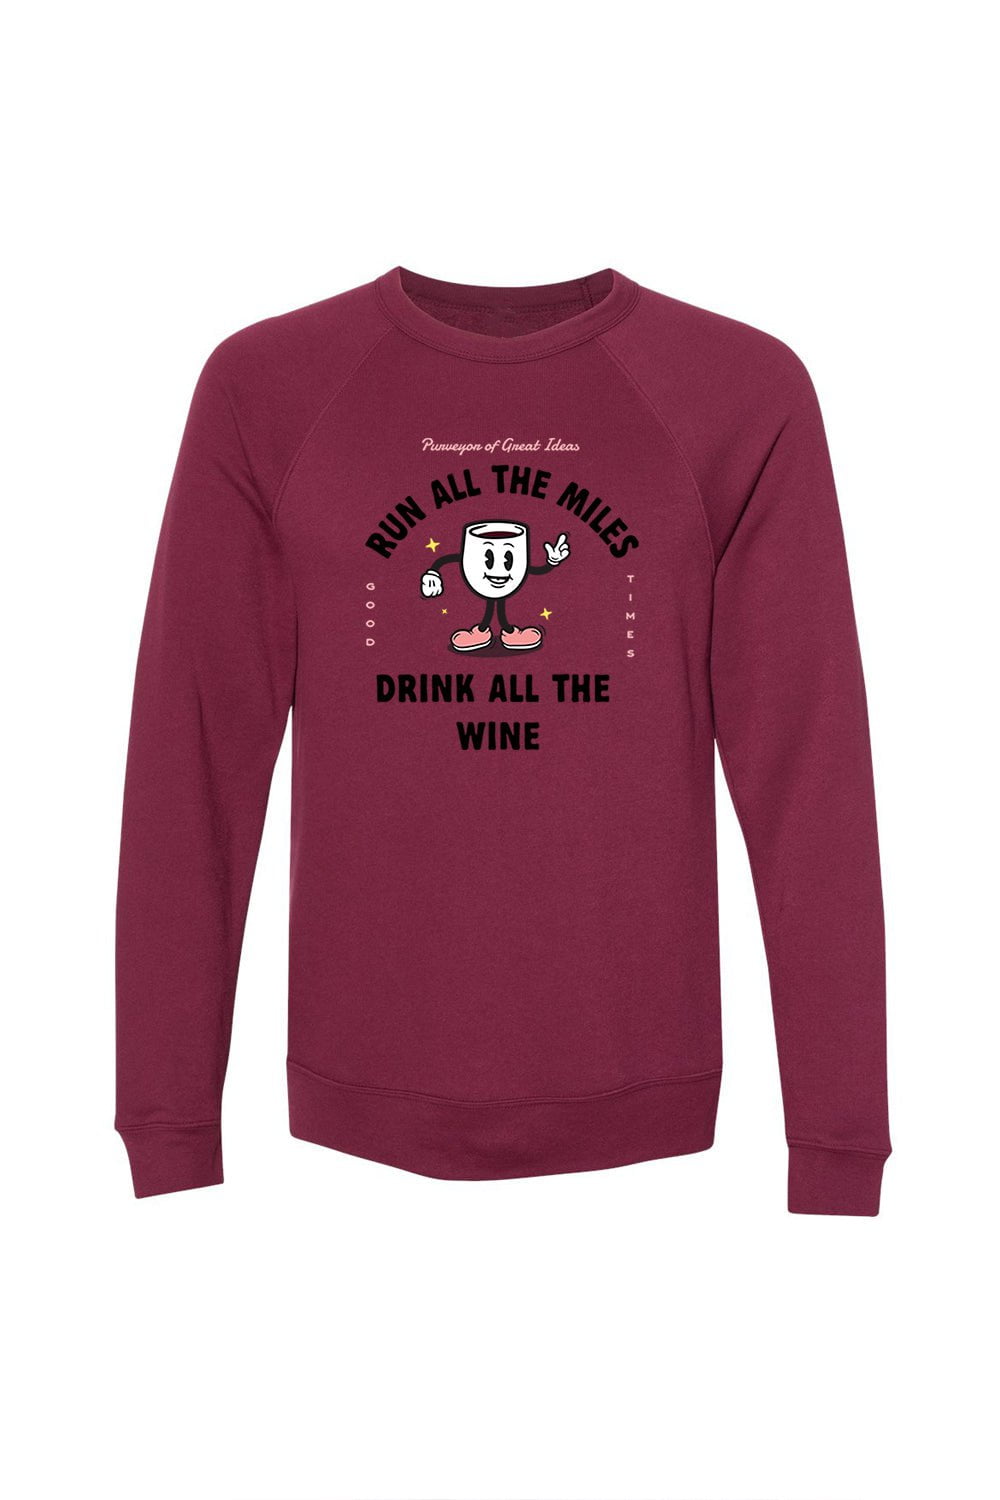 Sarah Marie Design Studio Sweatshirt Run All The Miles, Drink All The Wine Unisex Sweatshirt